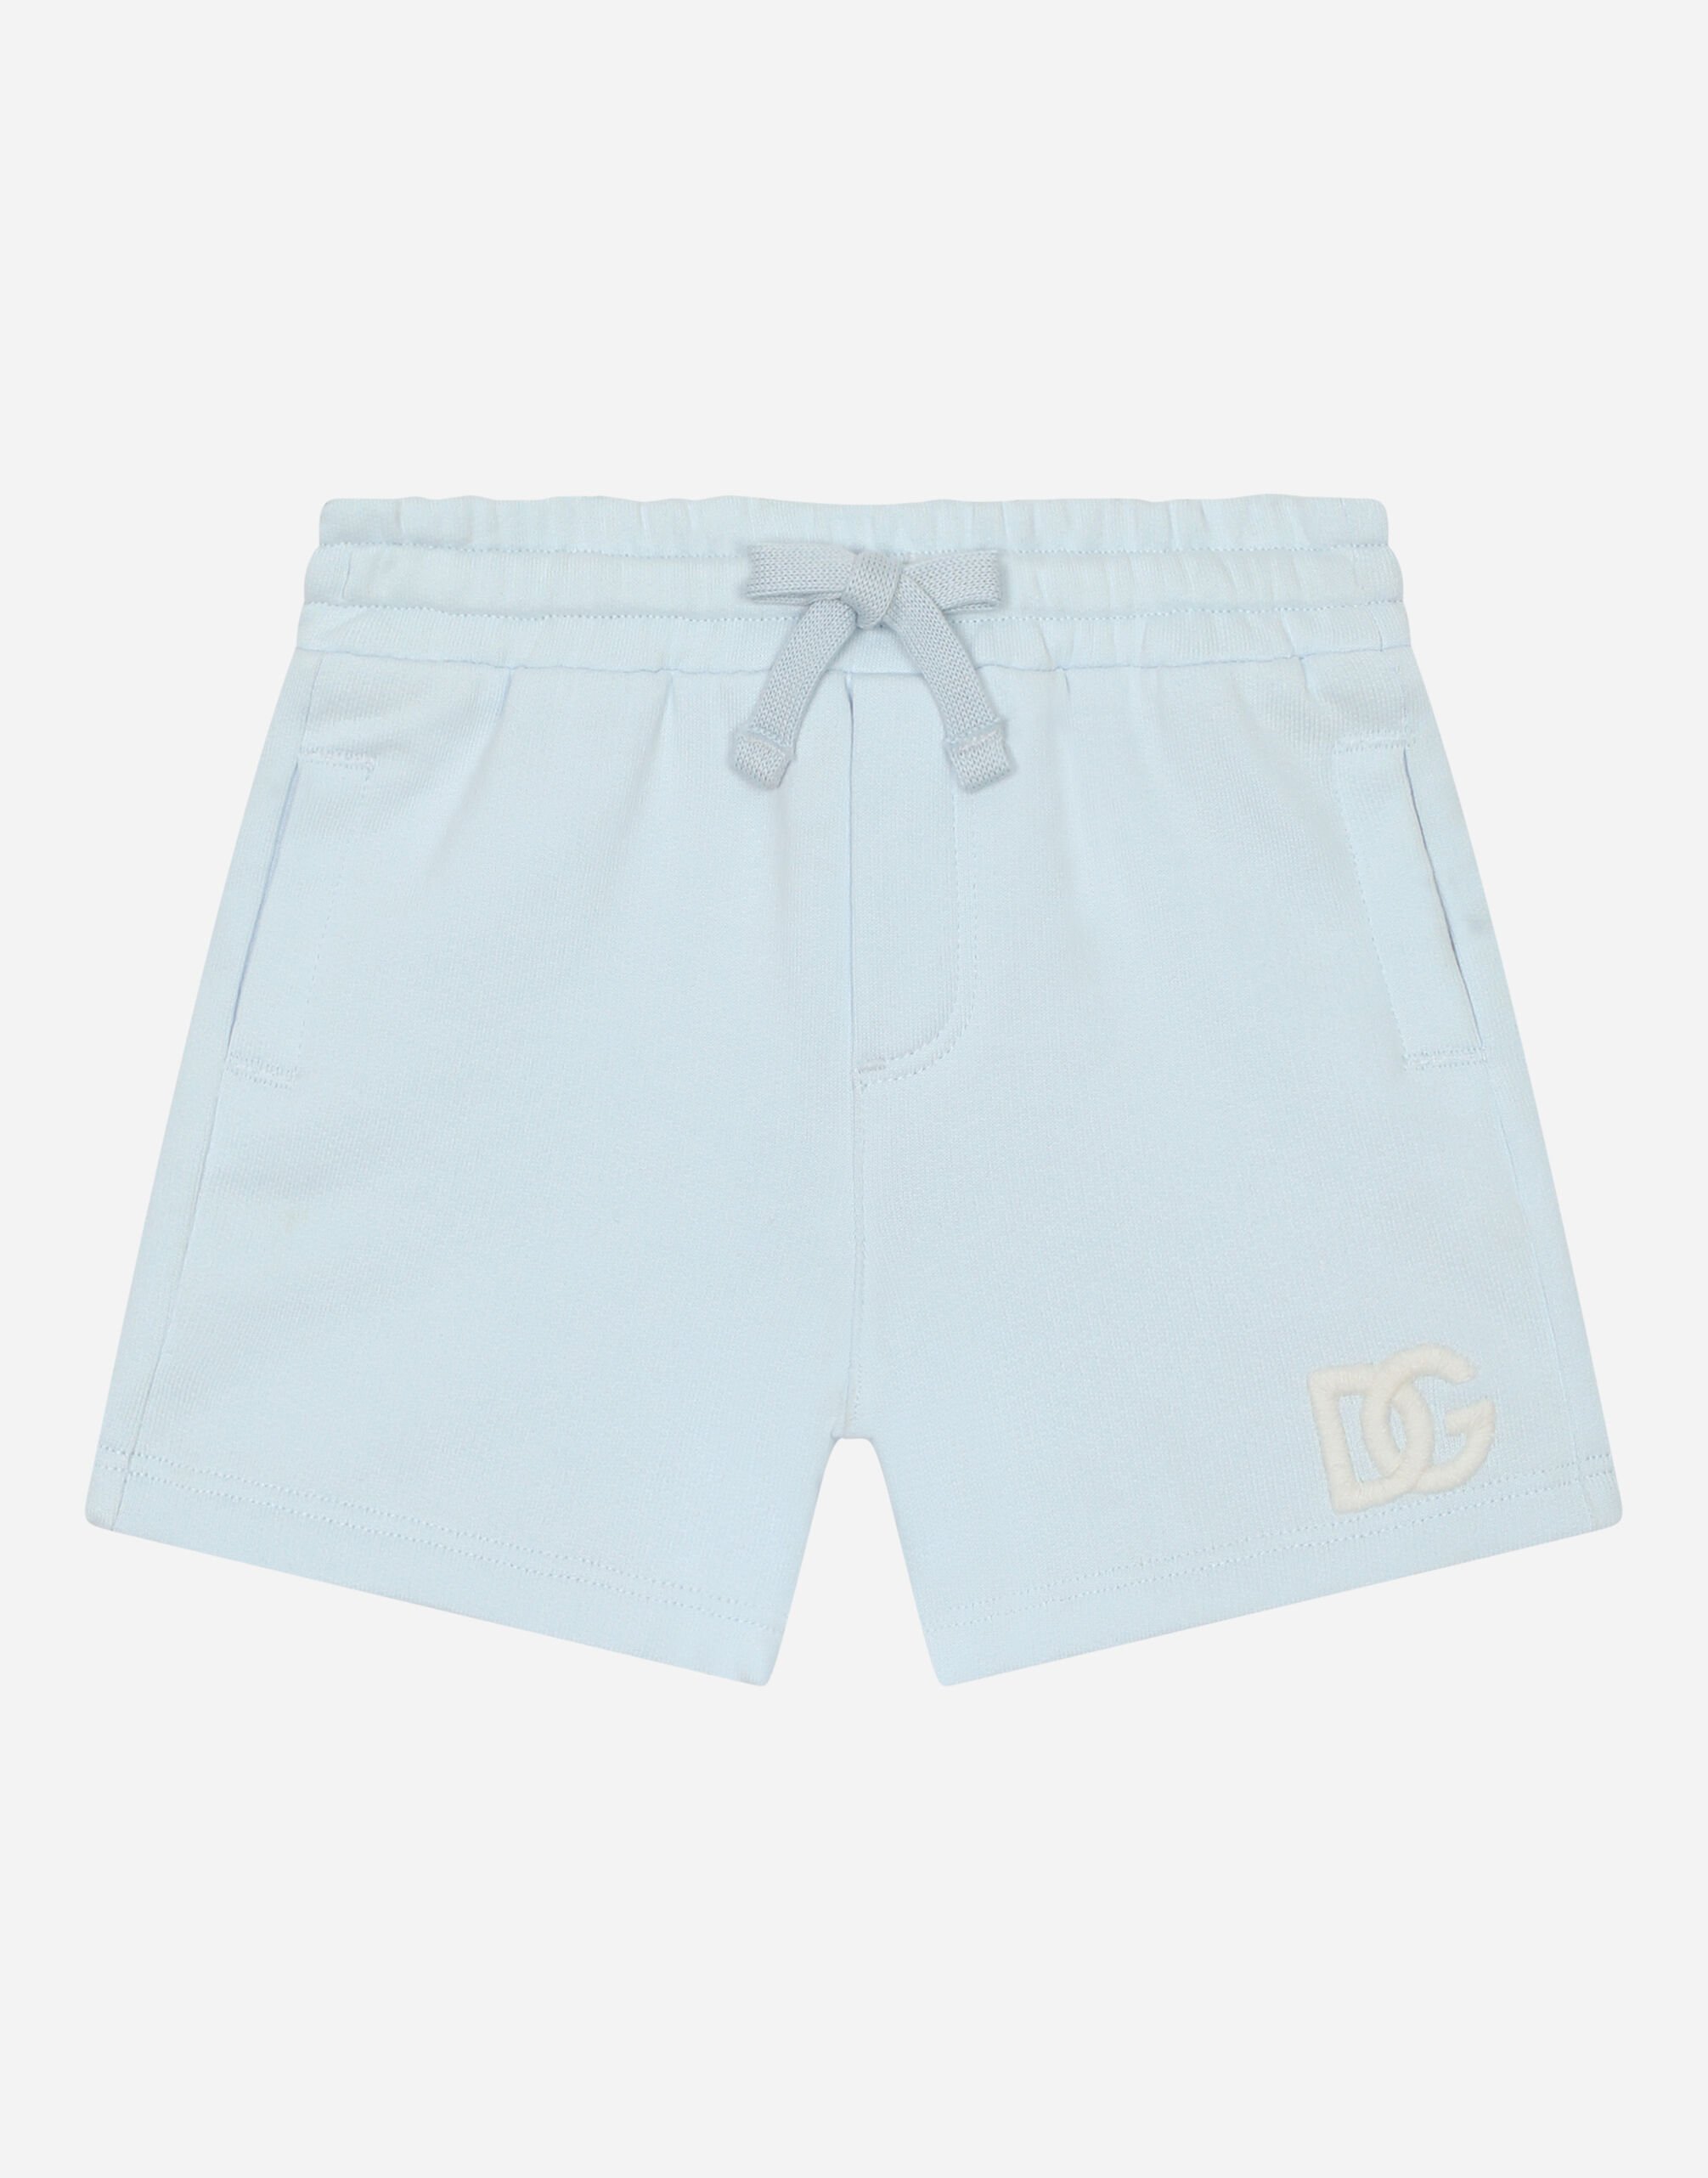 Dolce & Gabbana Jersey jogging shorts with DG logo embroidery Print L1JQT8II7EI